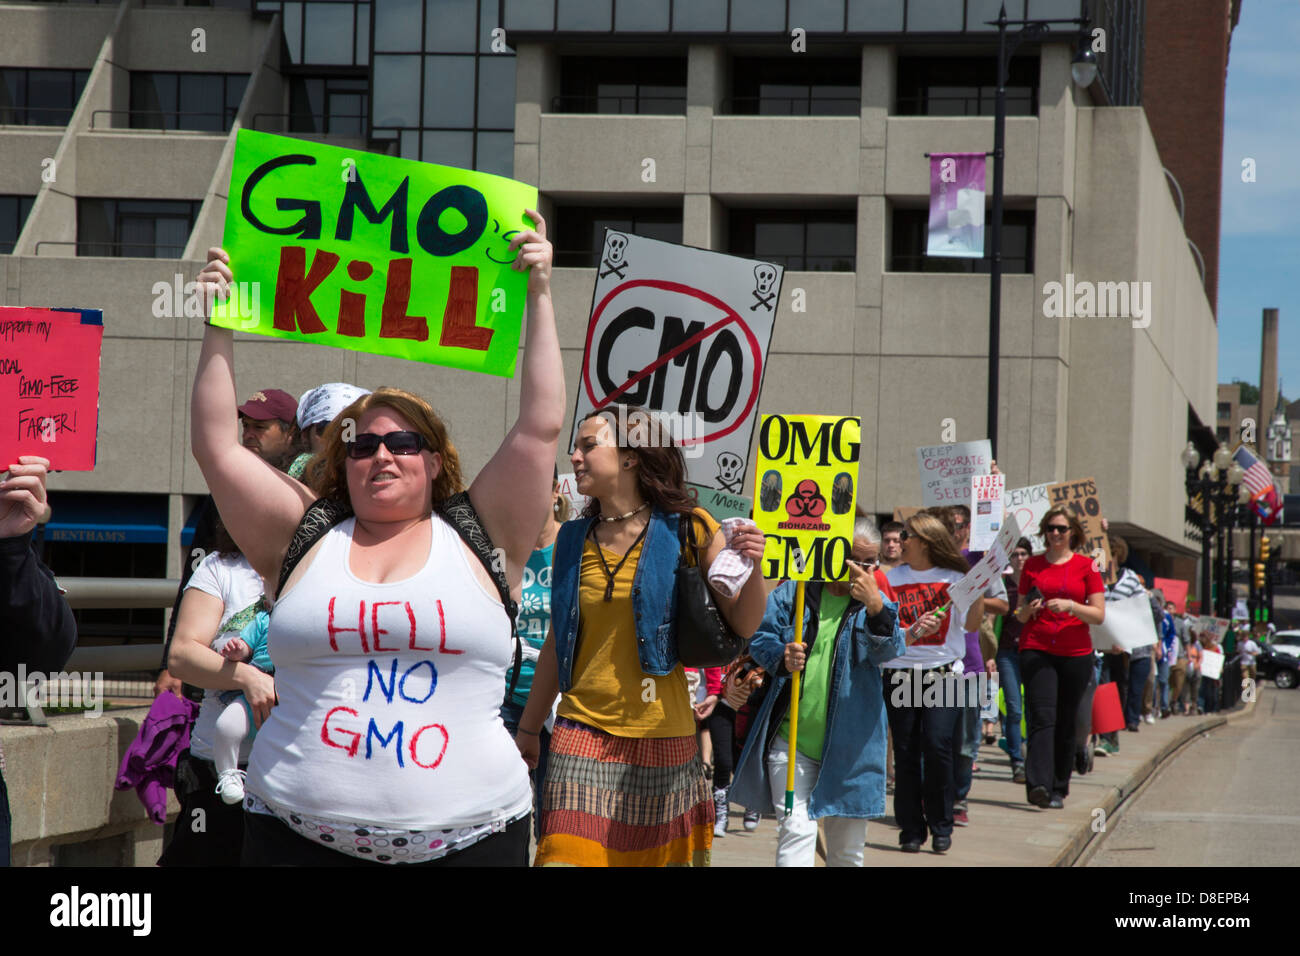 'Marco' protestas contra Monsanto alimentos genéticamente modificados Foto de stock